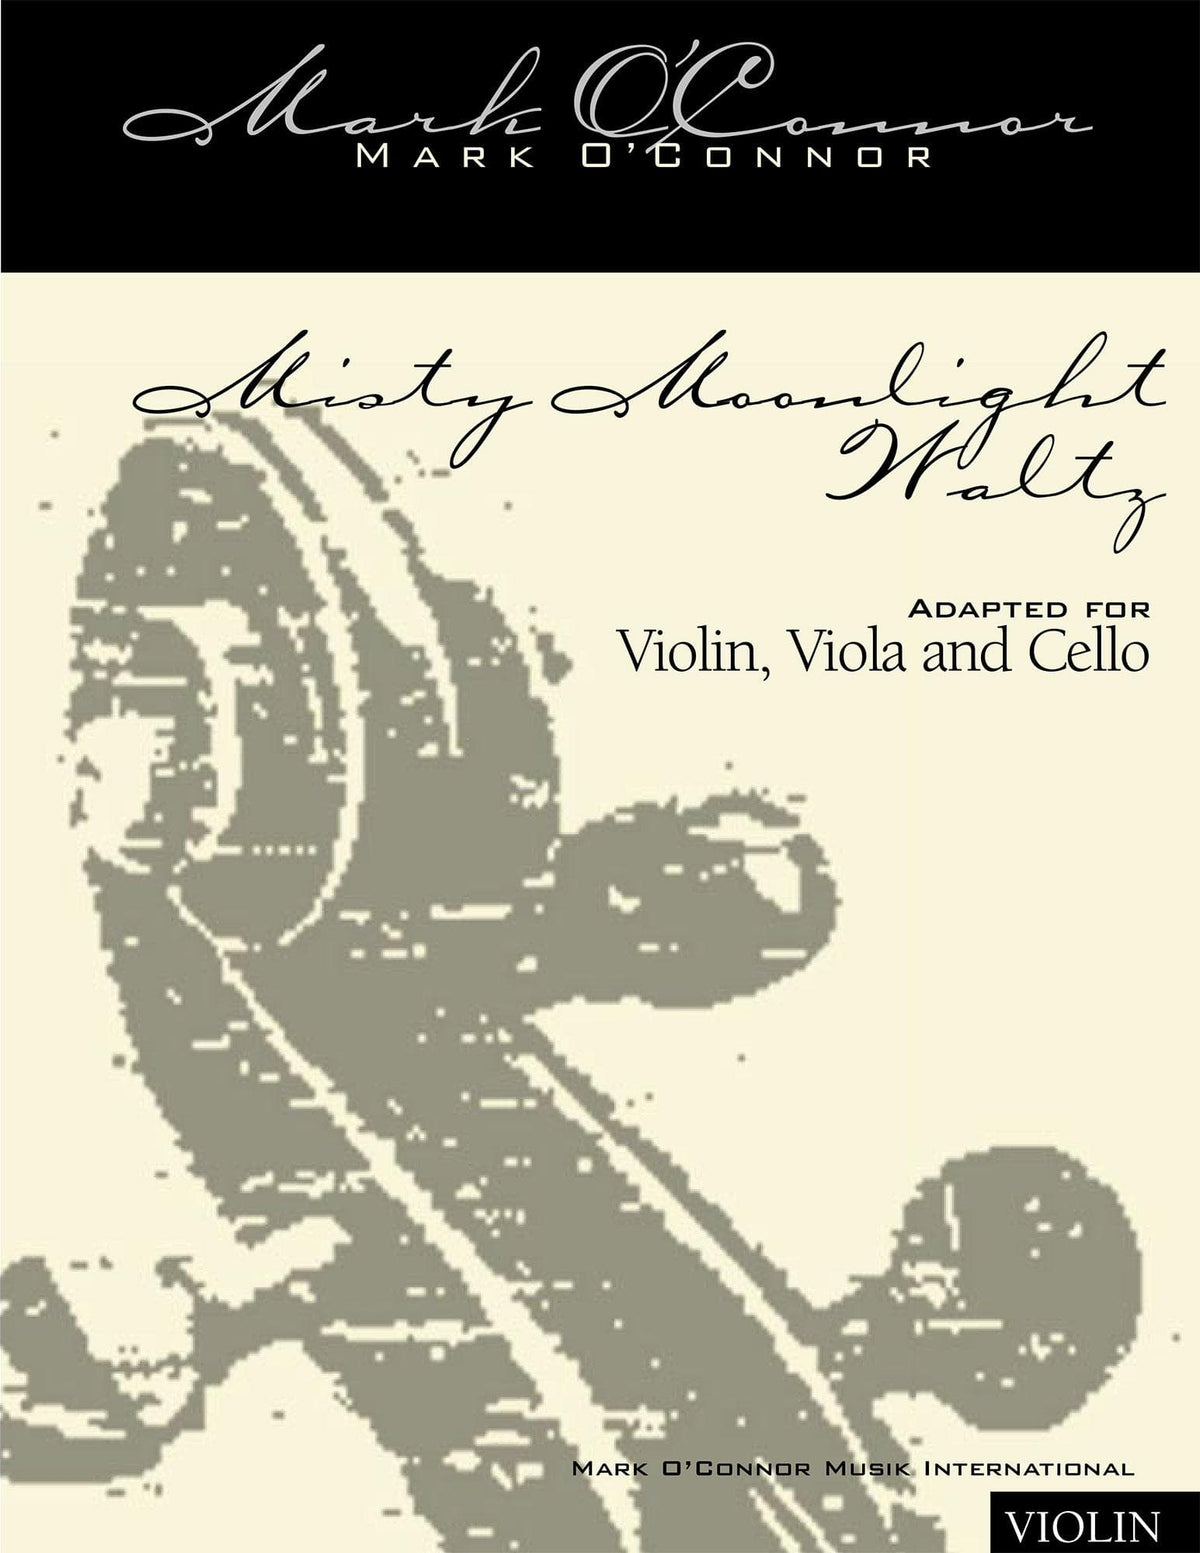 O'Connor, Mark - Misty Moonlight Waltz for Violin, Viola, and Cello - Violin - Digital Download